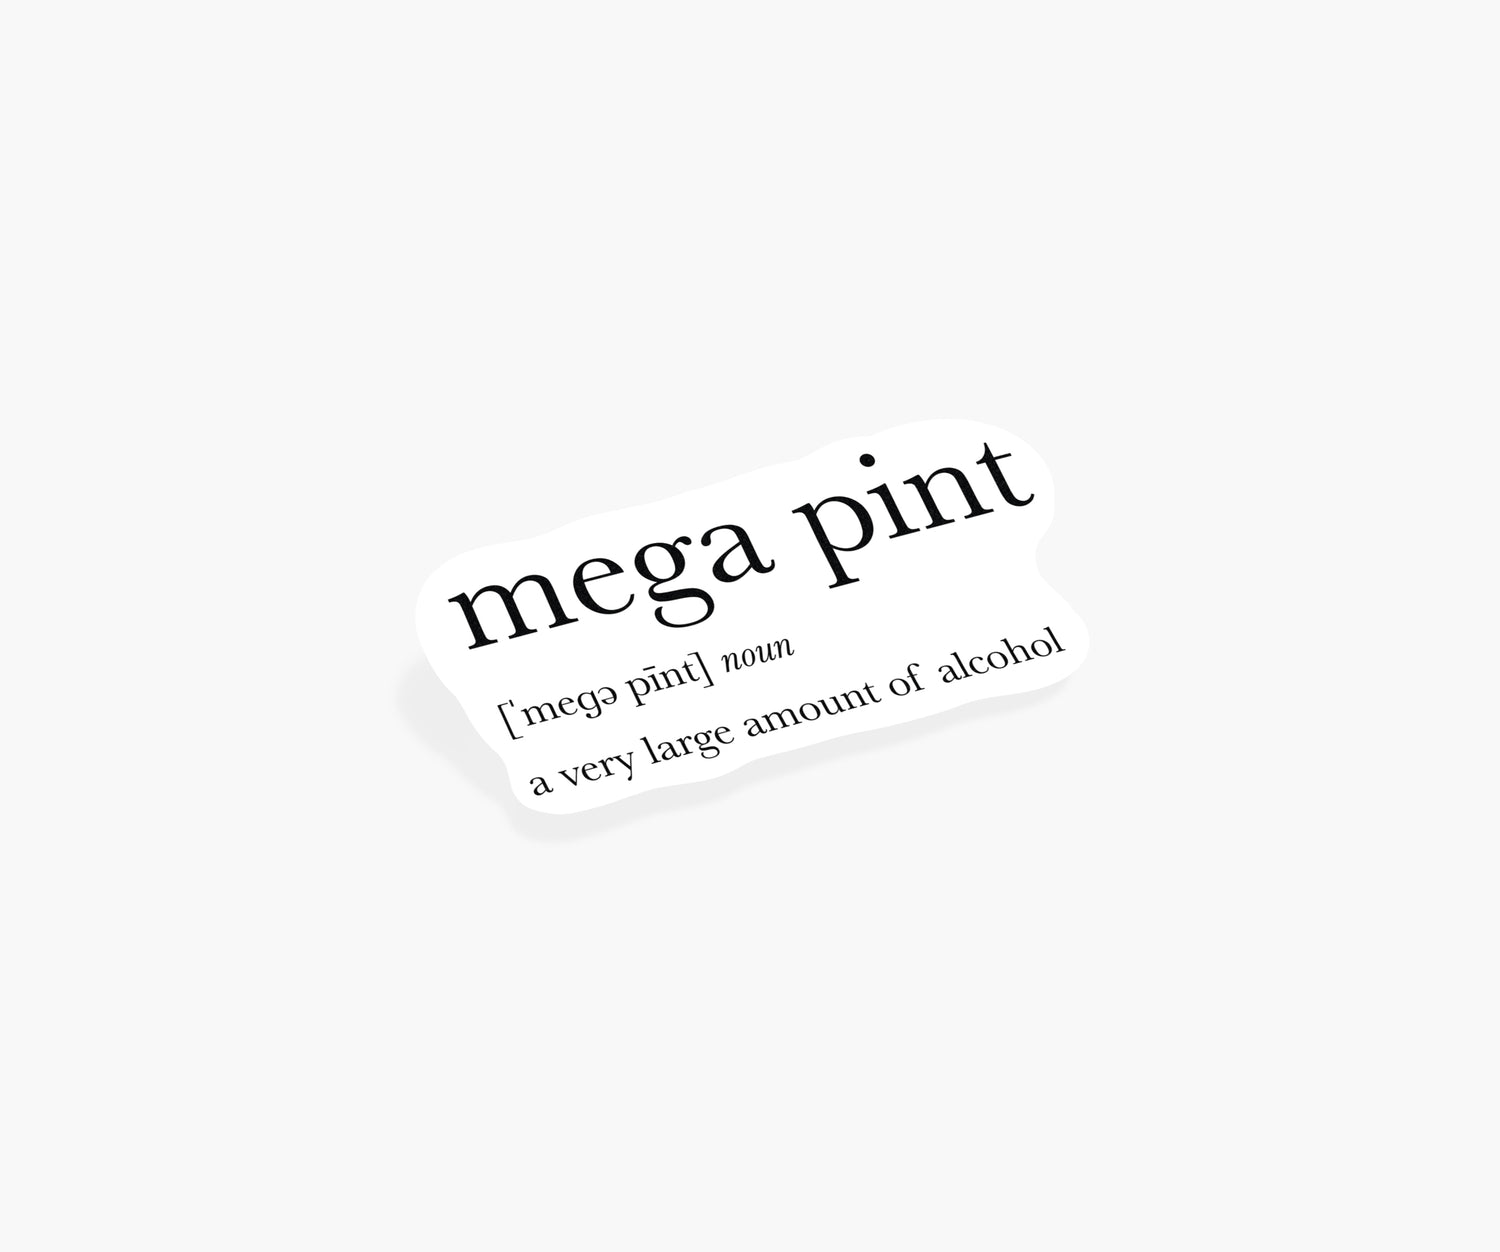 Mega Pint Definition - Johnny Depp Sticker | Footnotes Paper